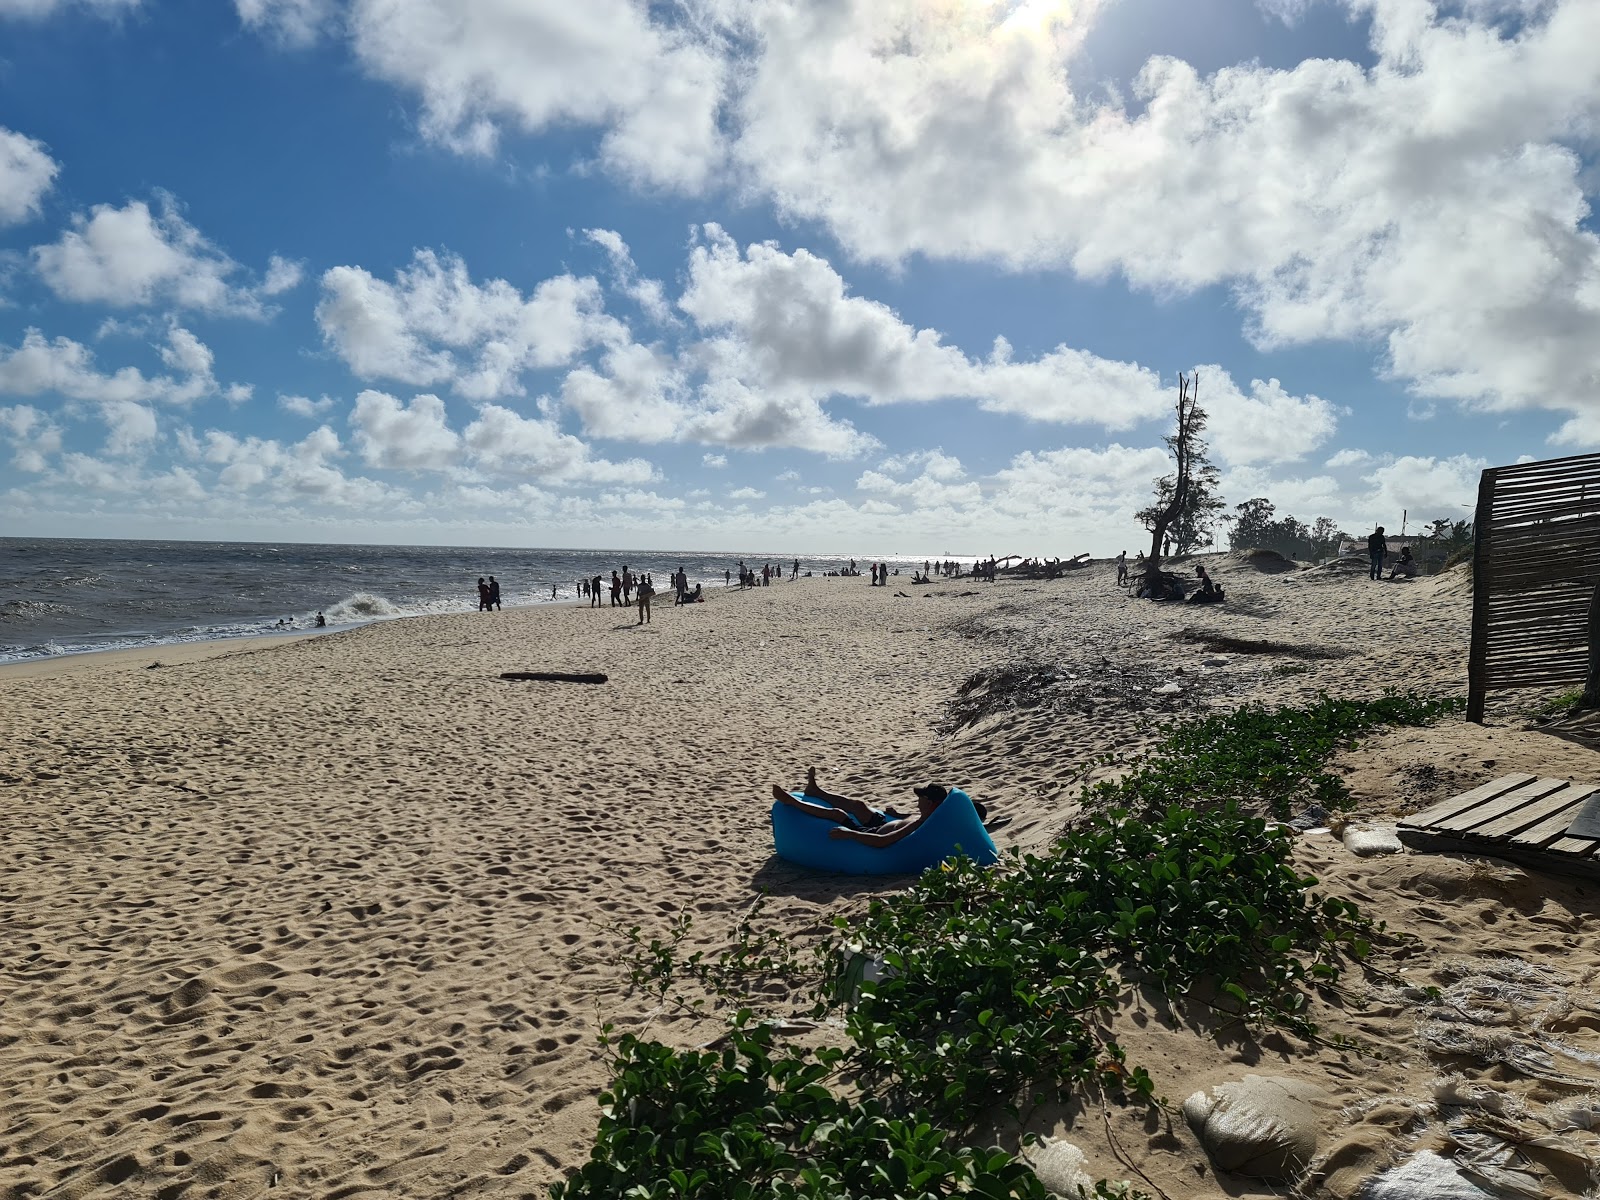 Foto av Beira Beach med hög nivå av renlighet